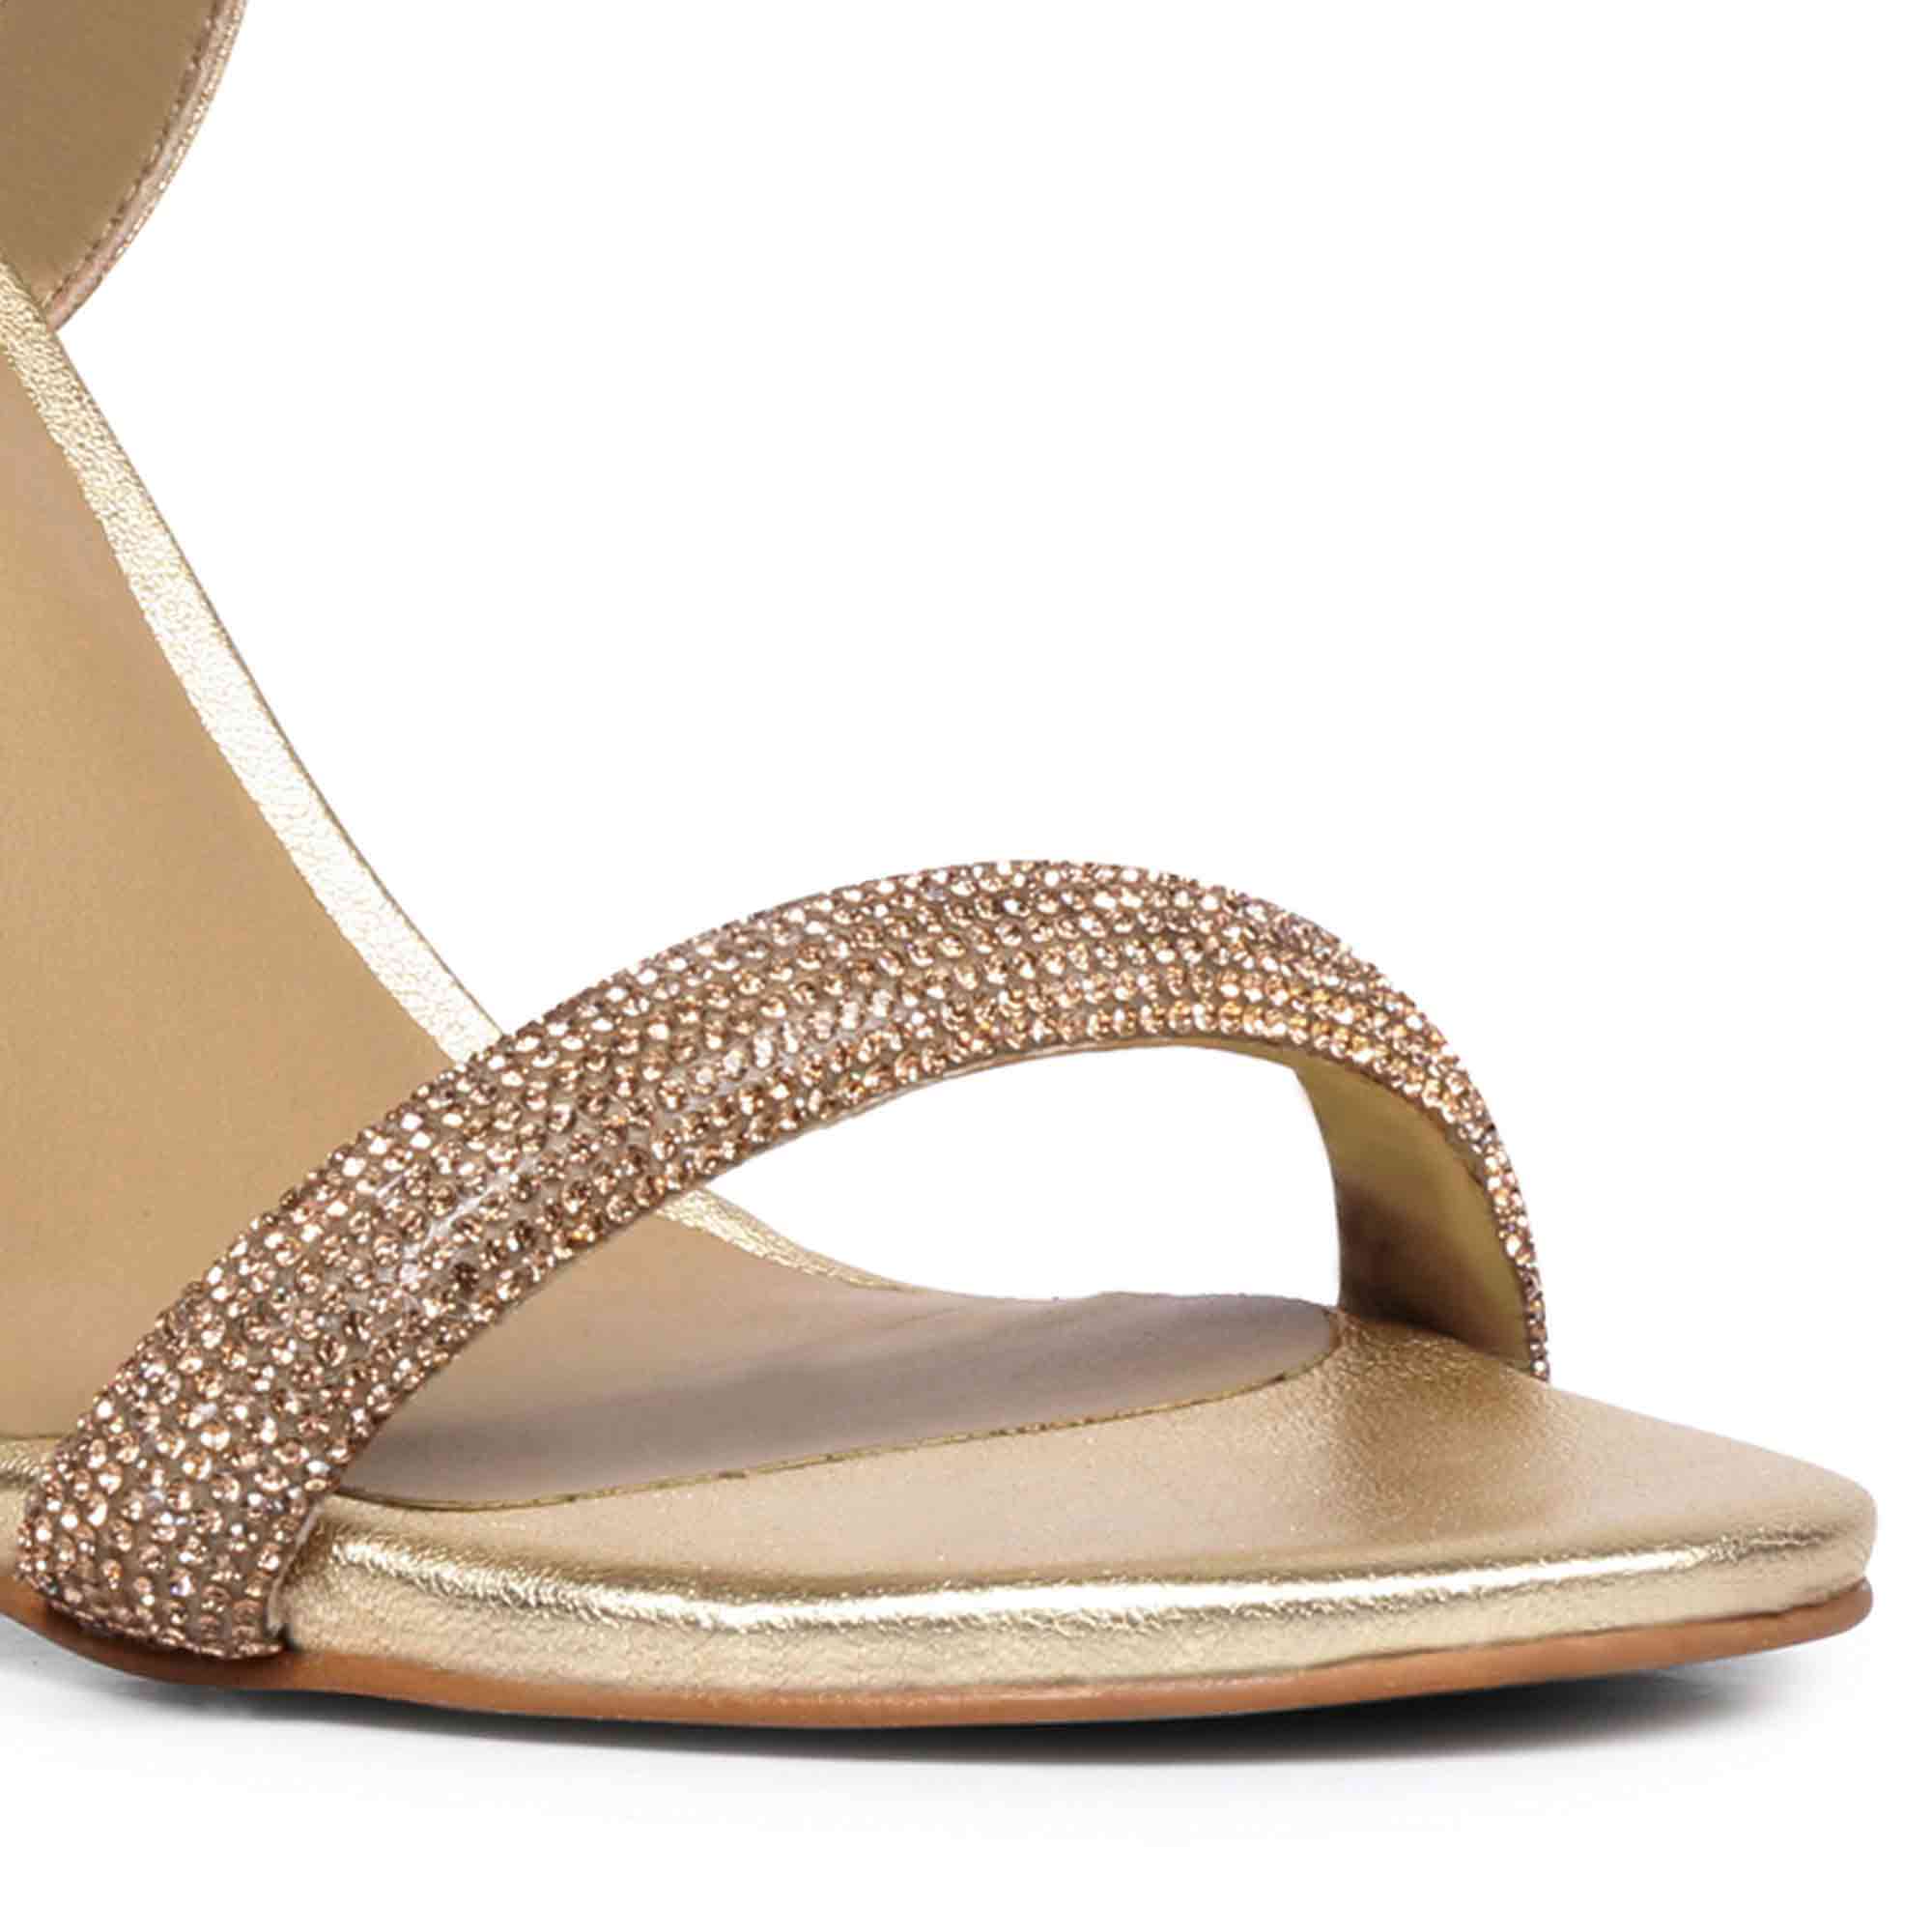 Metallic gold heeled sandals